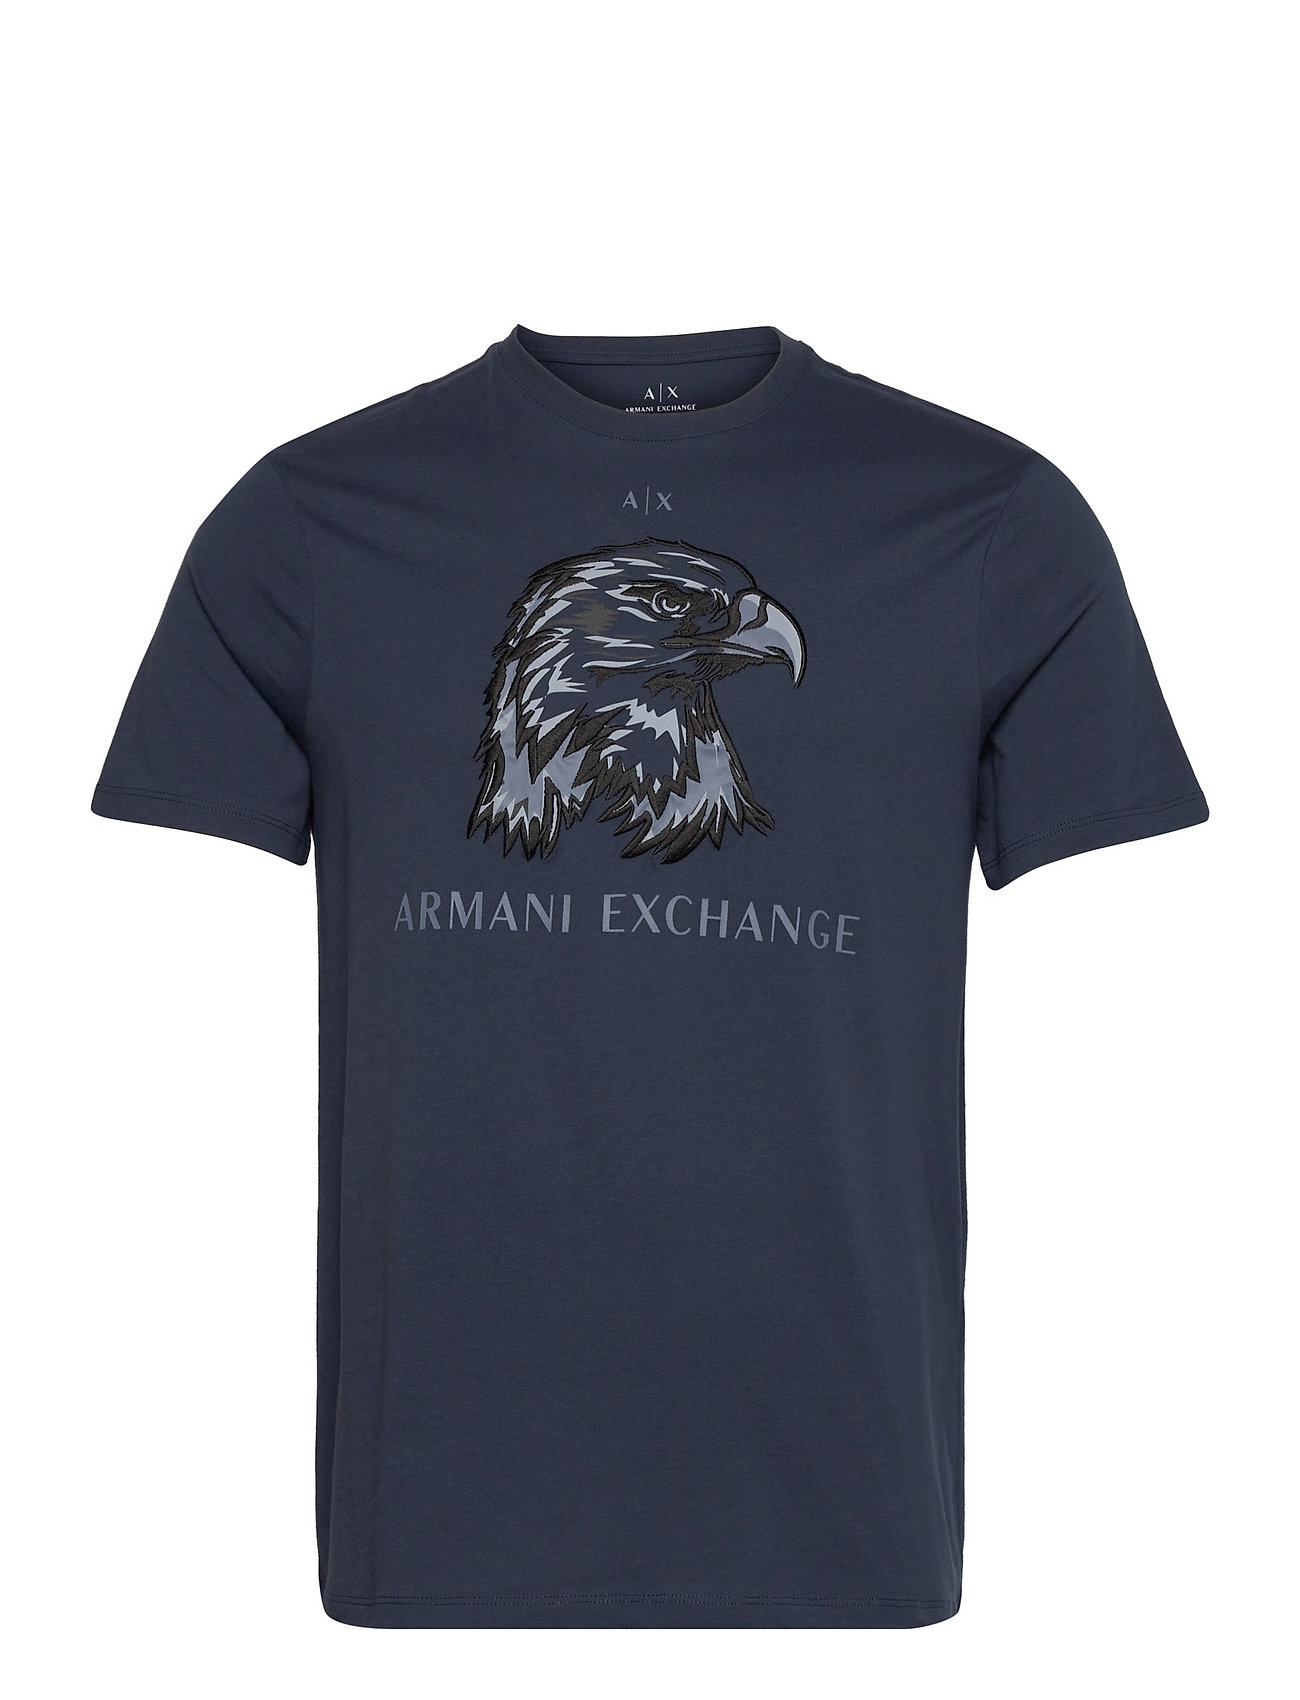 Armani Exchange T-Shirt T-shirts Short-sleeved Svart [Color: OUTER SPACE ][Sex: Men ][Sizes: XS,S ]